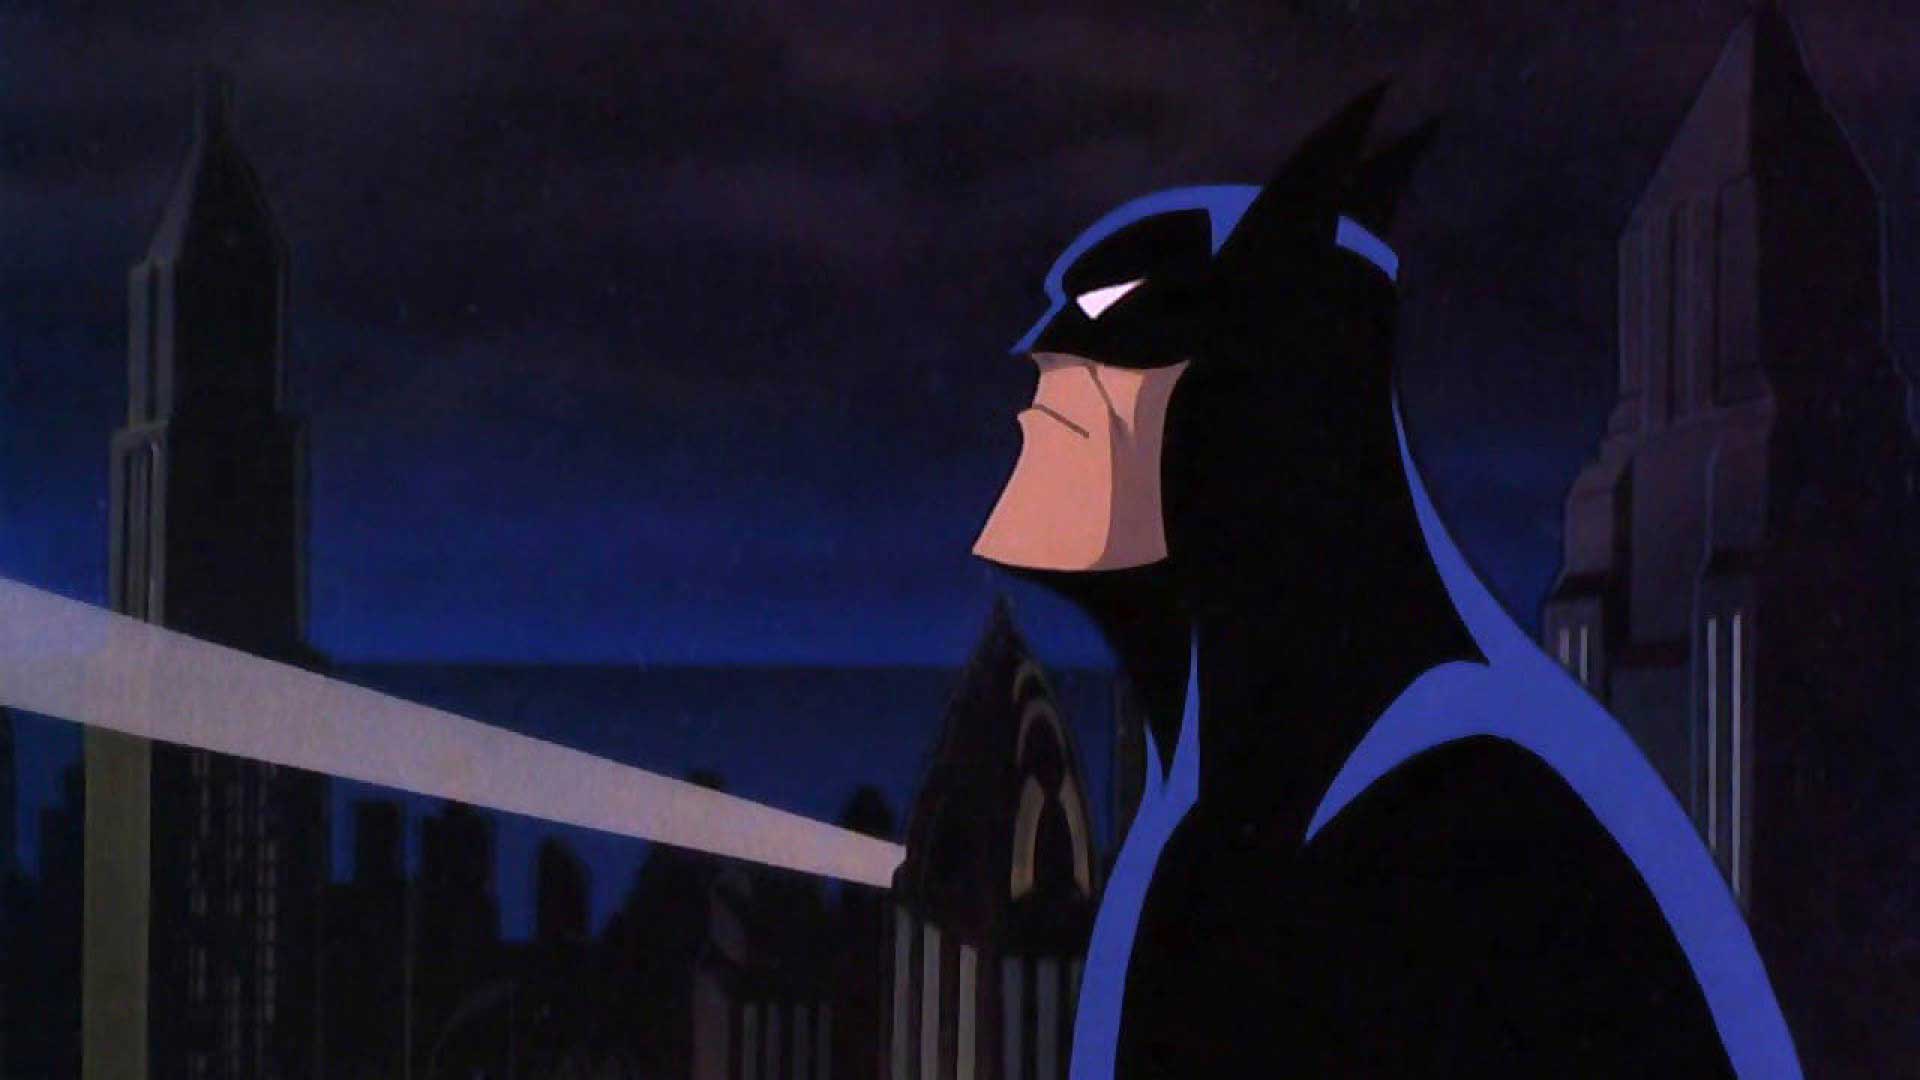 دانلود انیمیشن Batman: Mask of the Phantasm 1993